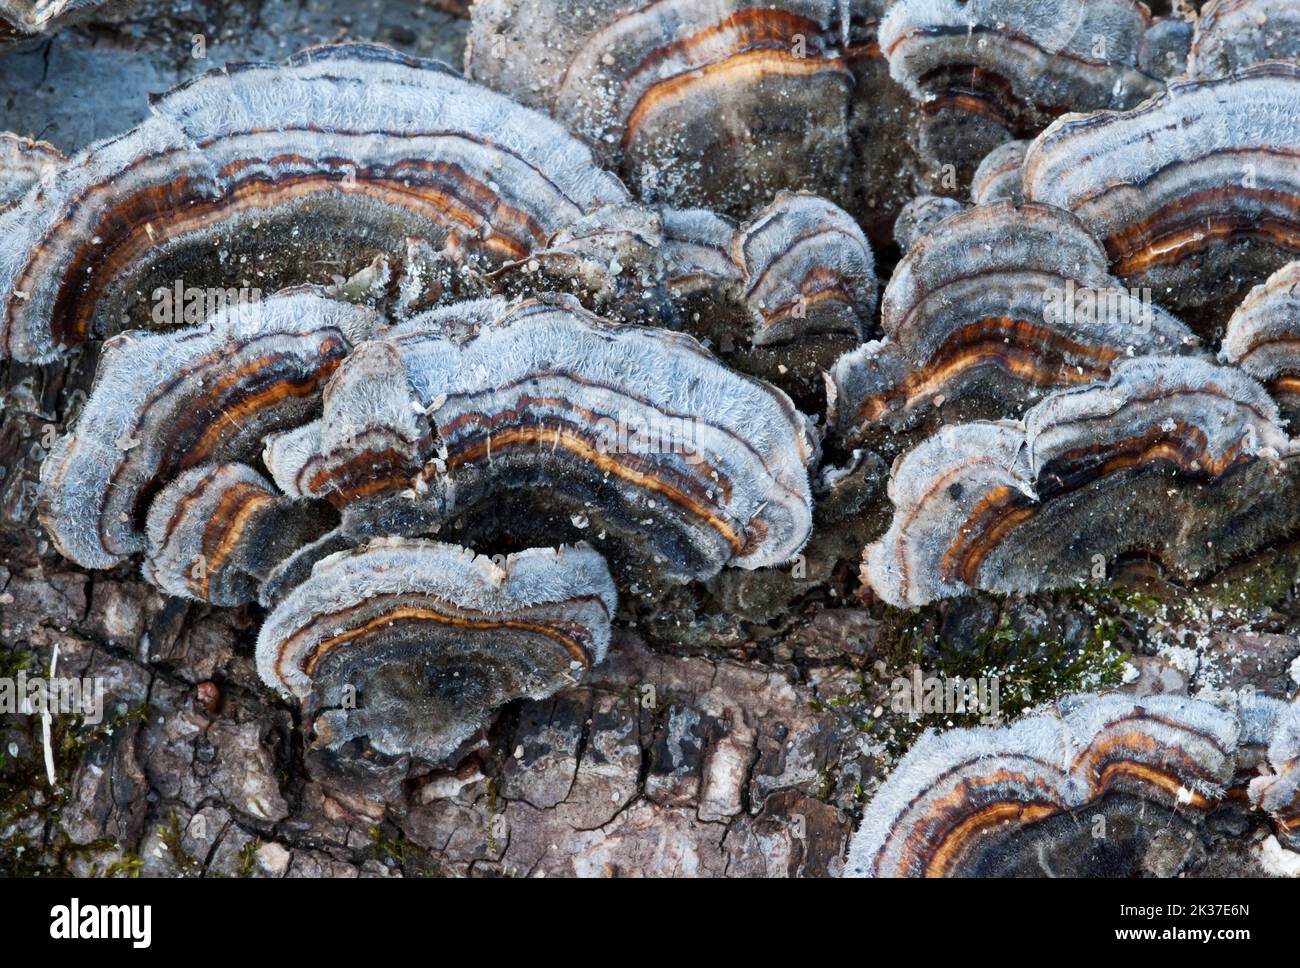 Turkeytail fungi 9Trametes versicolor) Stock Photo